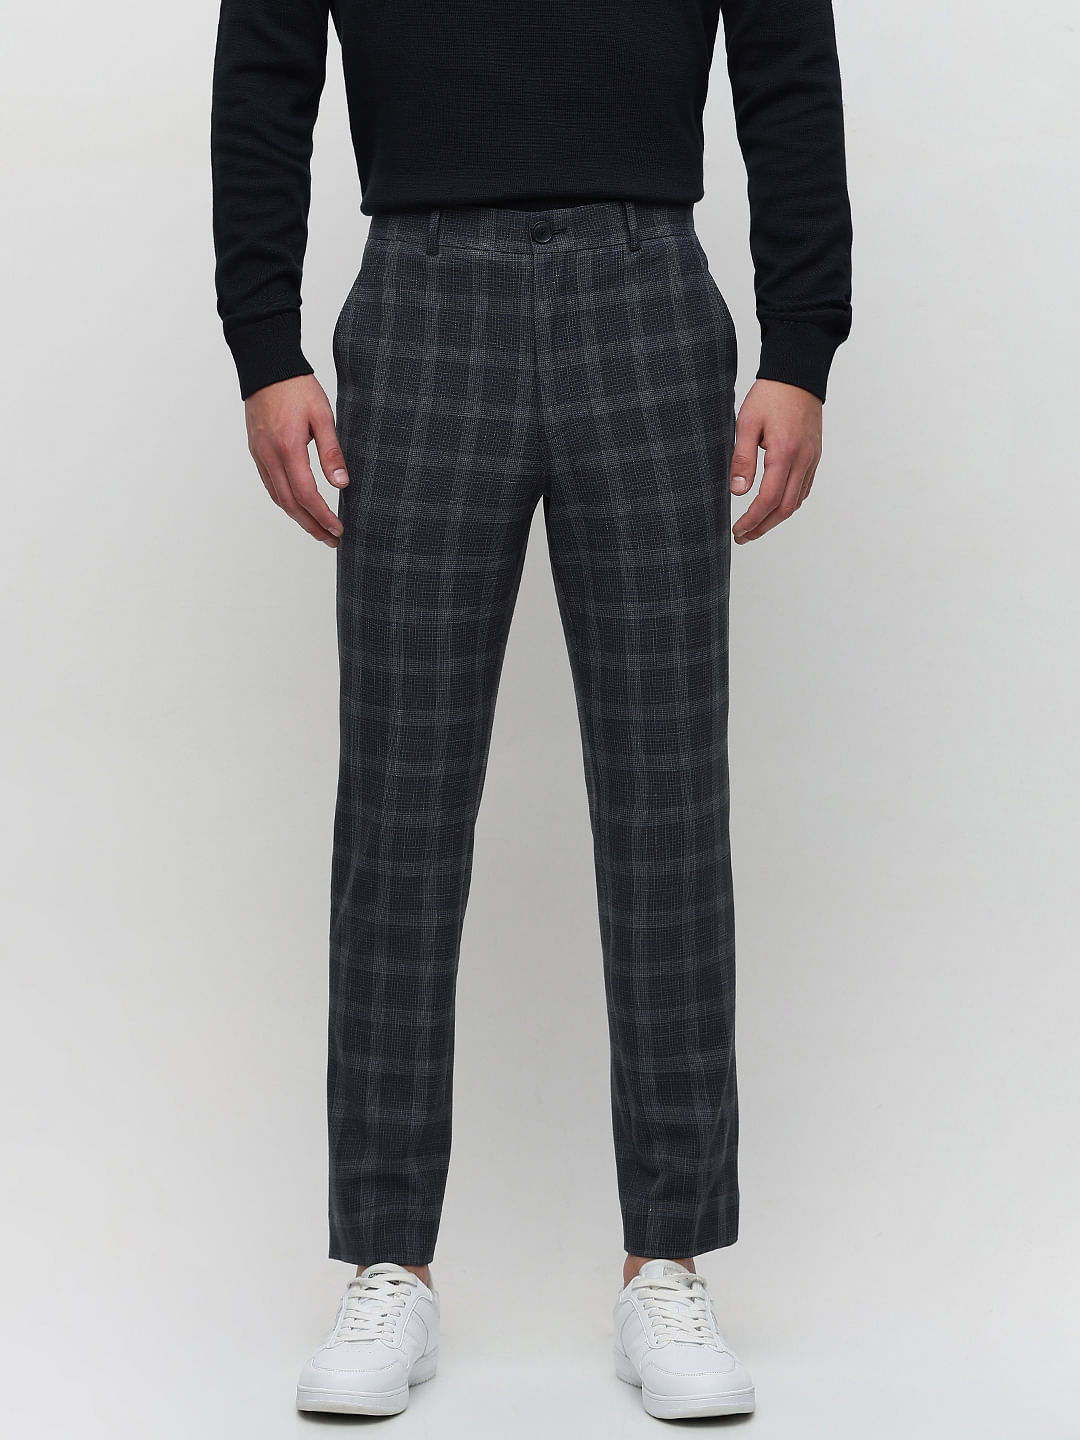 Men's Super Skinny Grey Check Suit Pants | boohoo